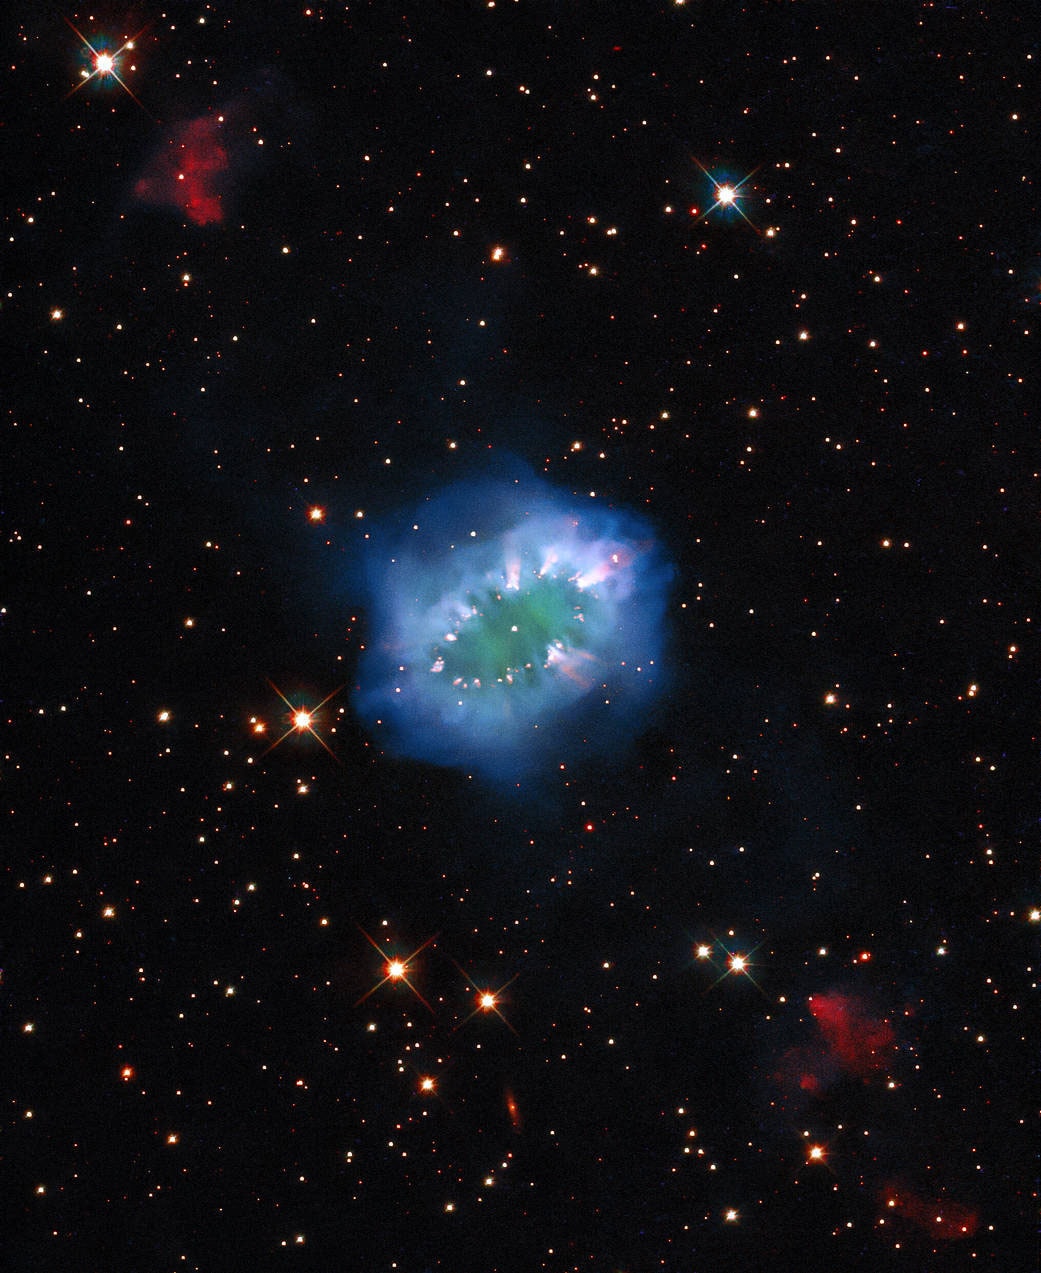 nasa space diamond necklace nebula cosmic proportions hubble telescope info PN G054.2-03.4